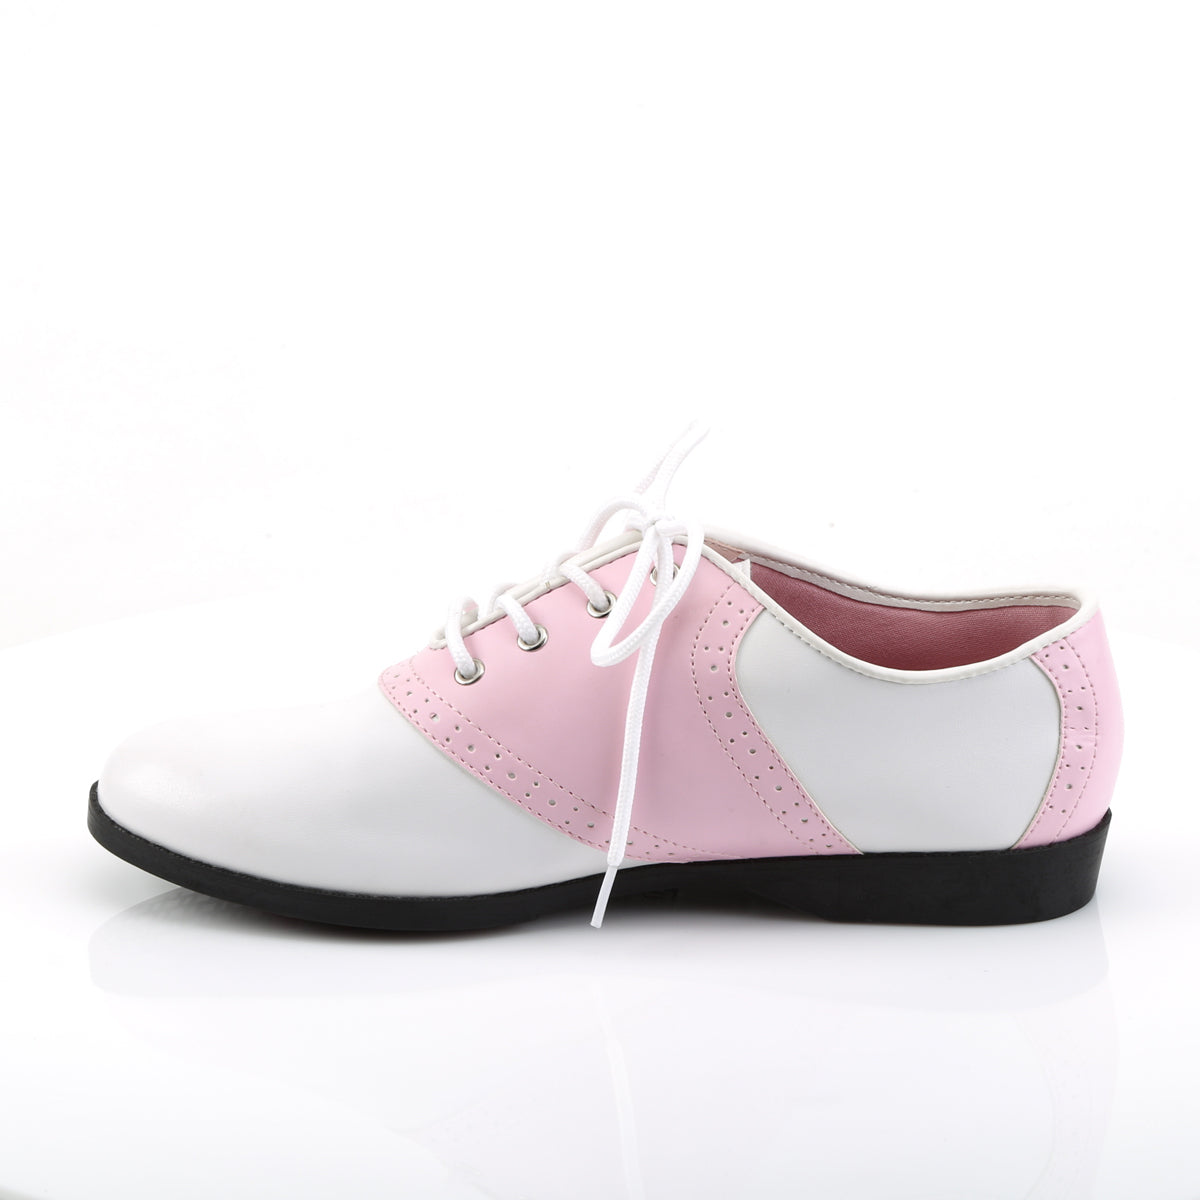 SADDLE-50 Funtasma Baby Pink Women's Costume Shoes Funtasma Costume Shoes 